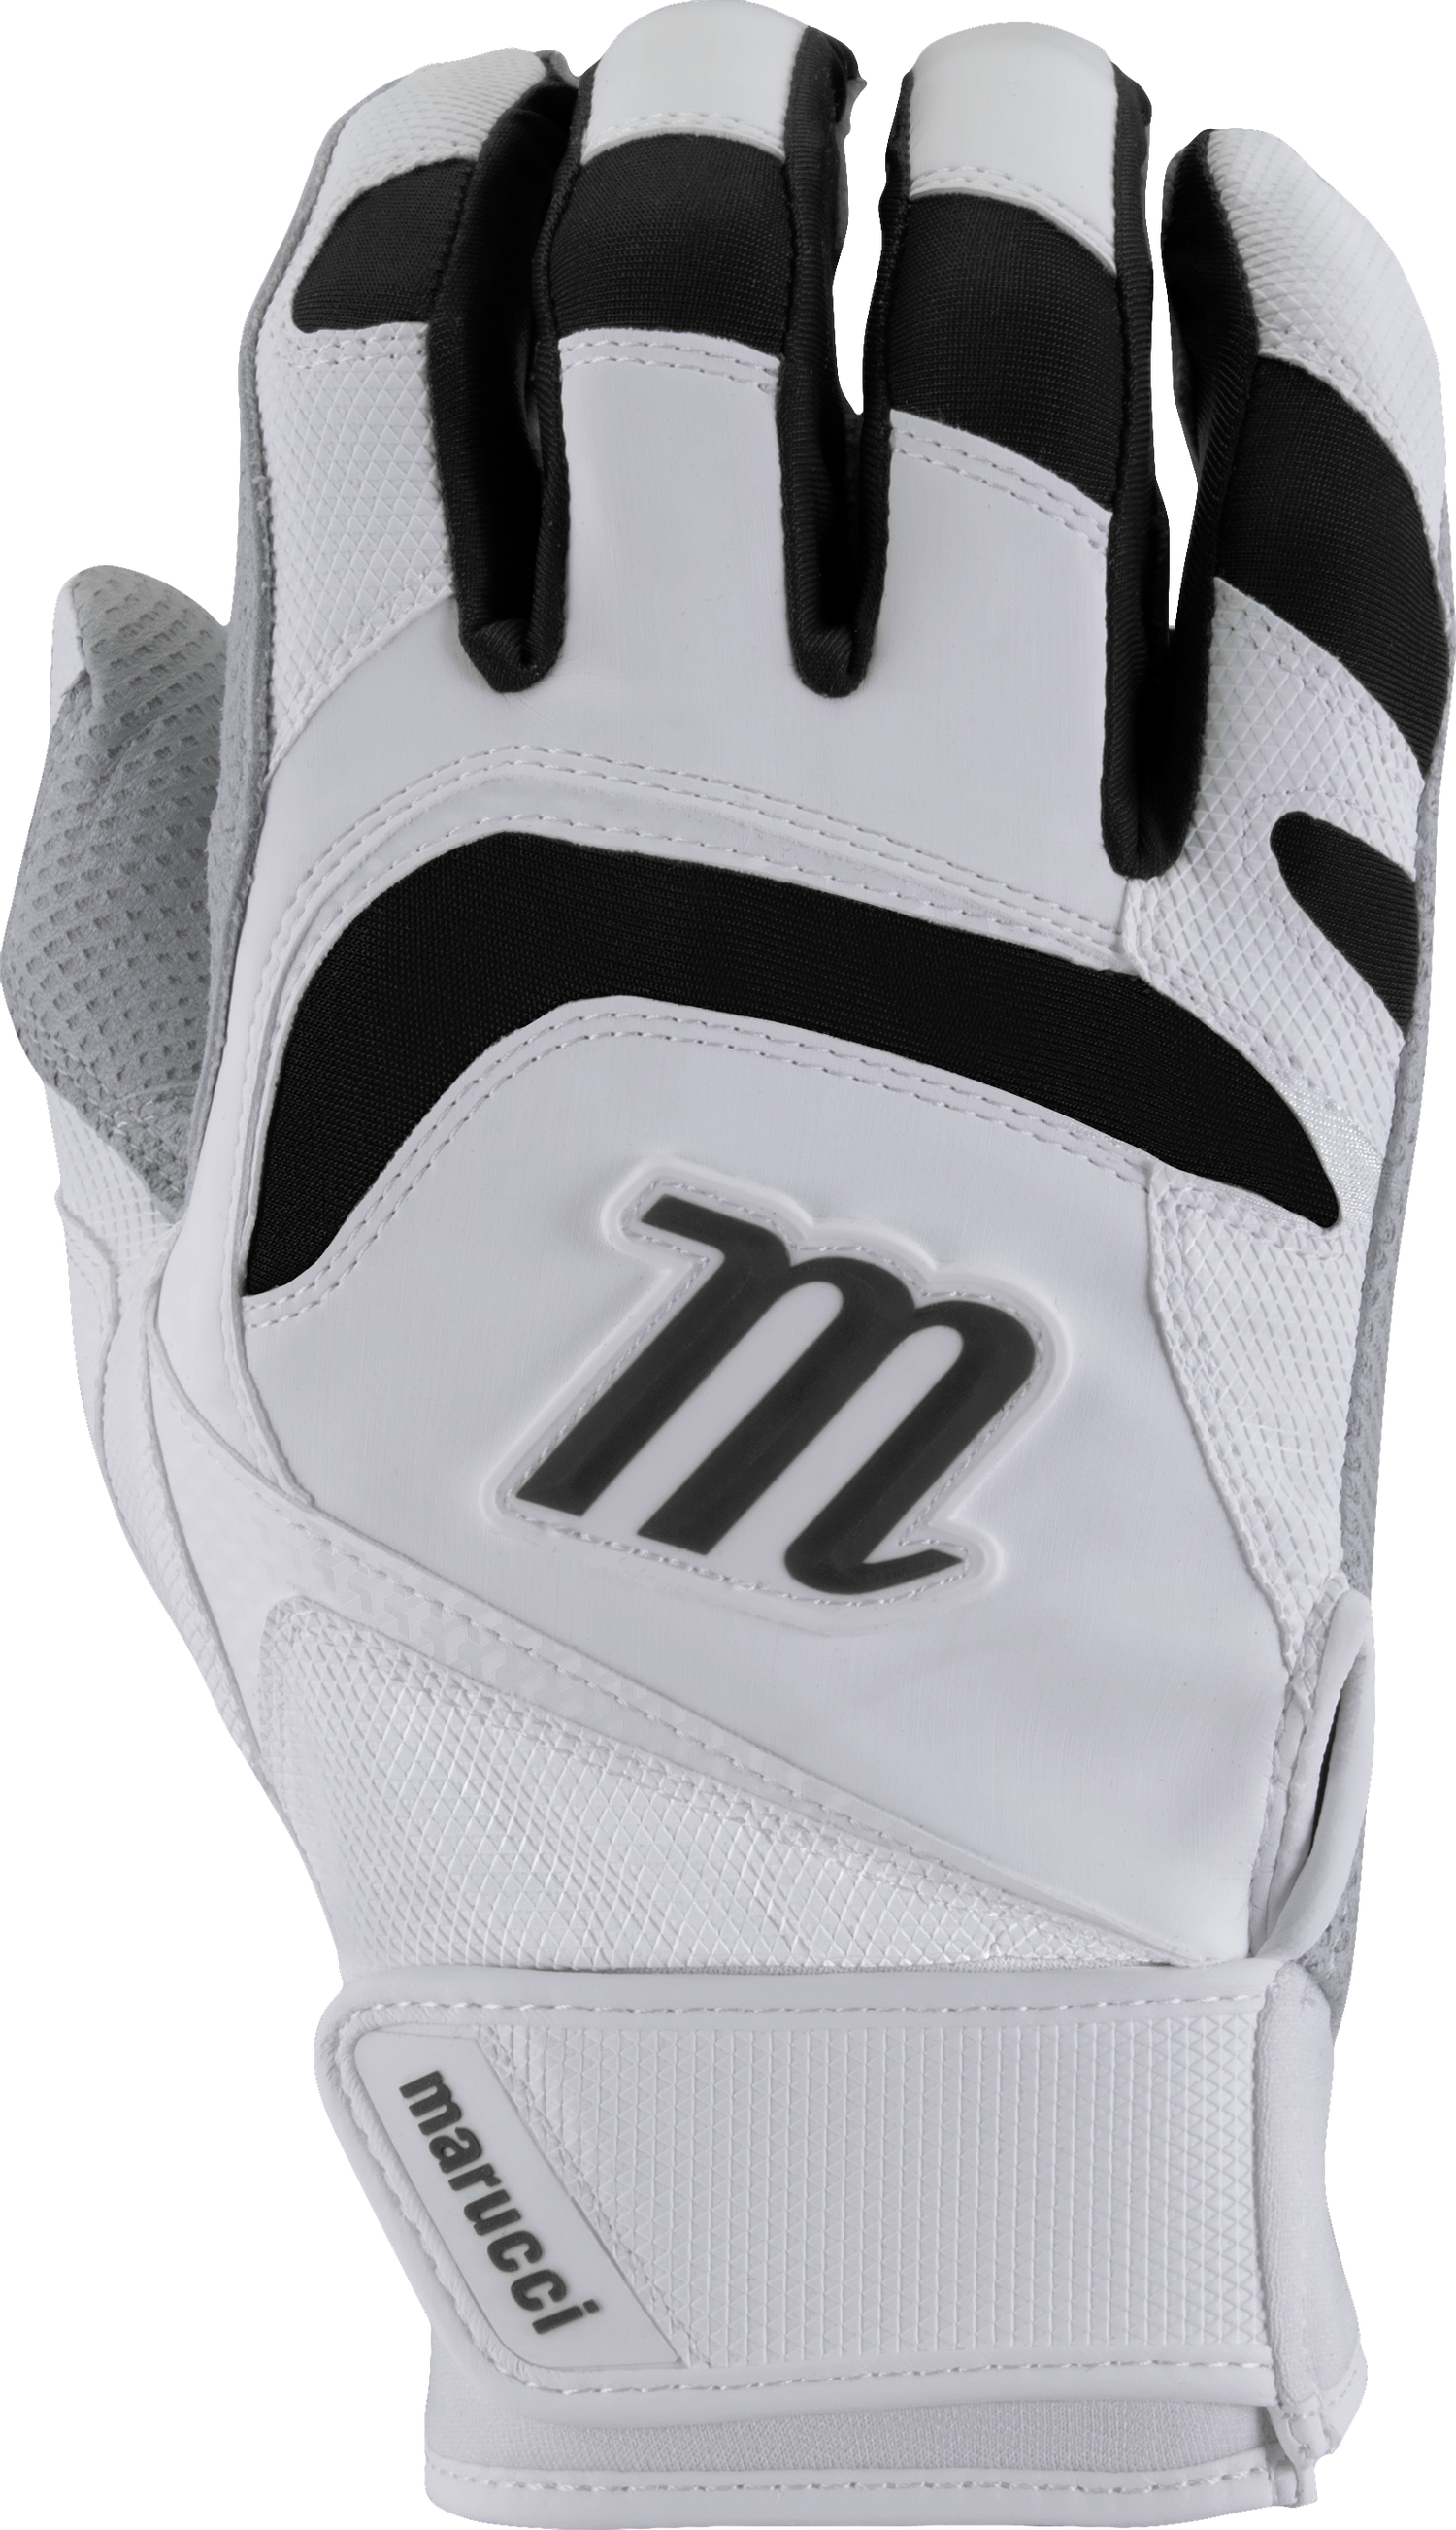 Signature Batting Gloves V4 - Black